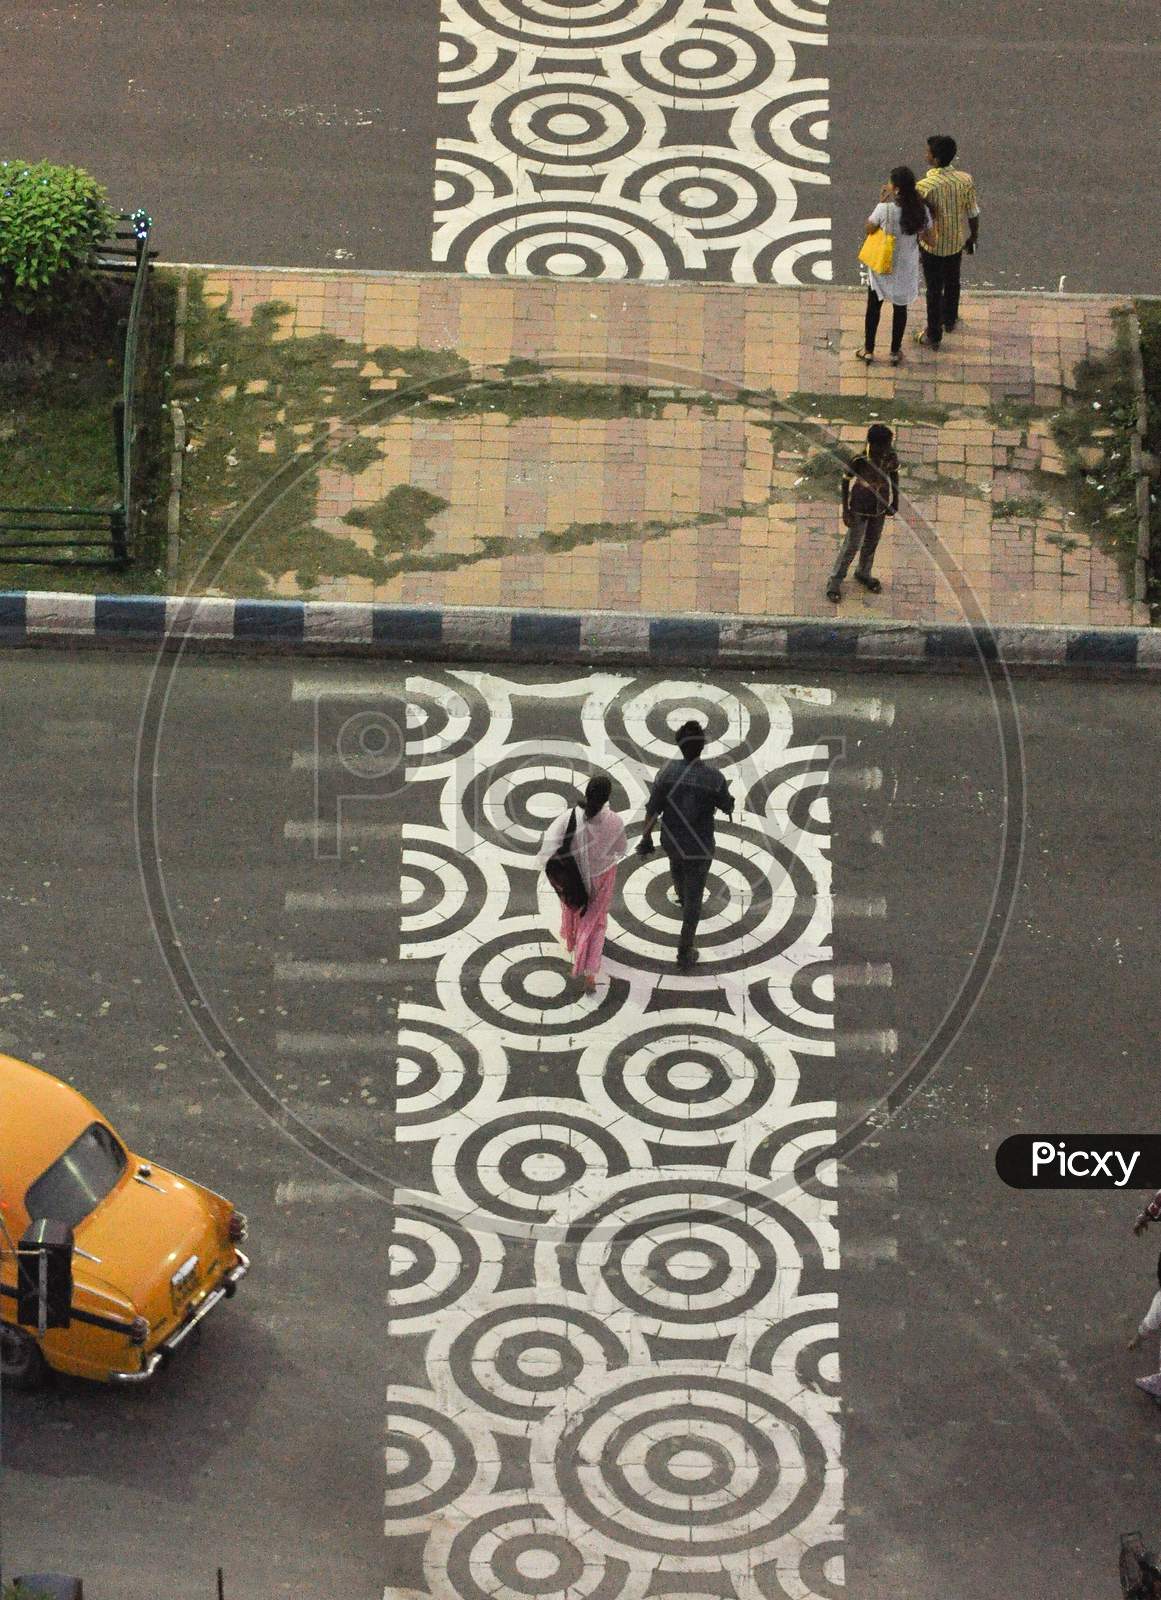 Decorated Zebra crossing